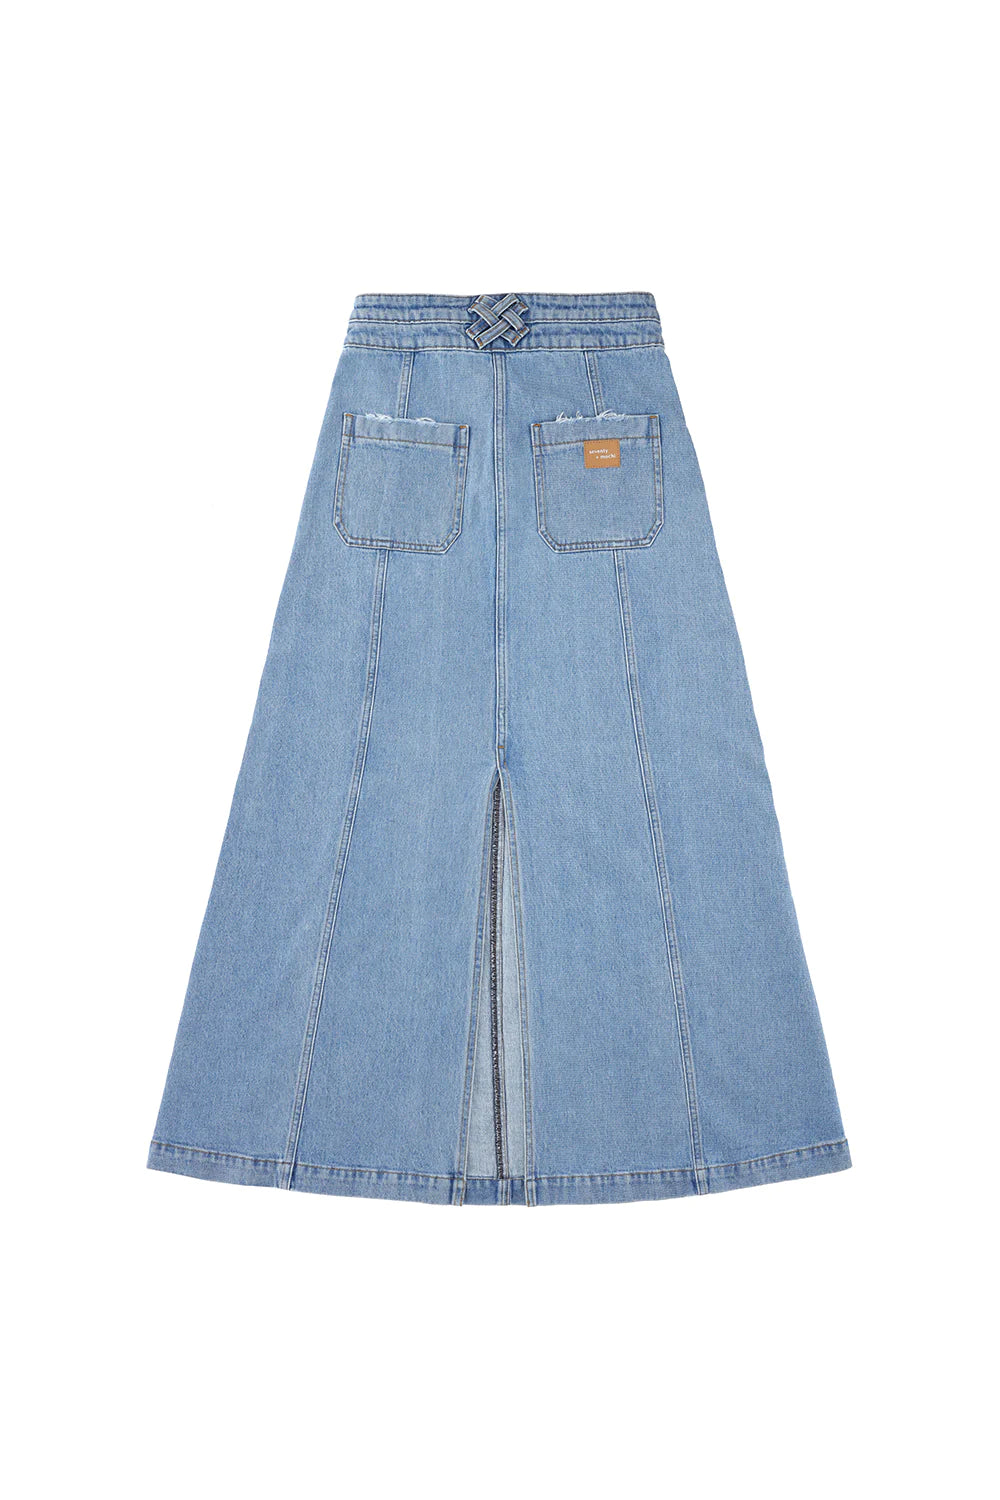 Seventy + Mochi Willow Skirt - Rodeo Vintage